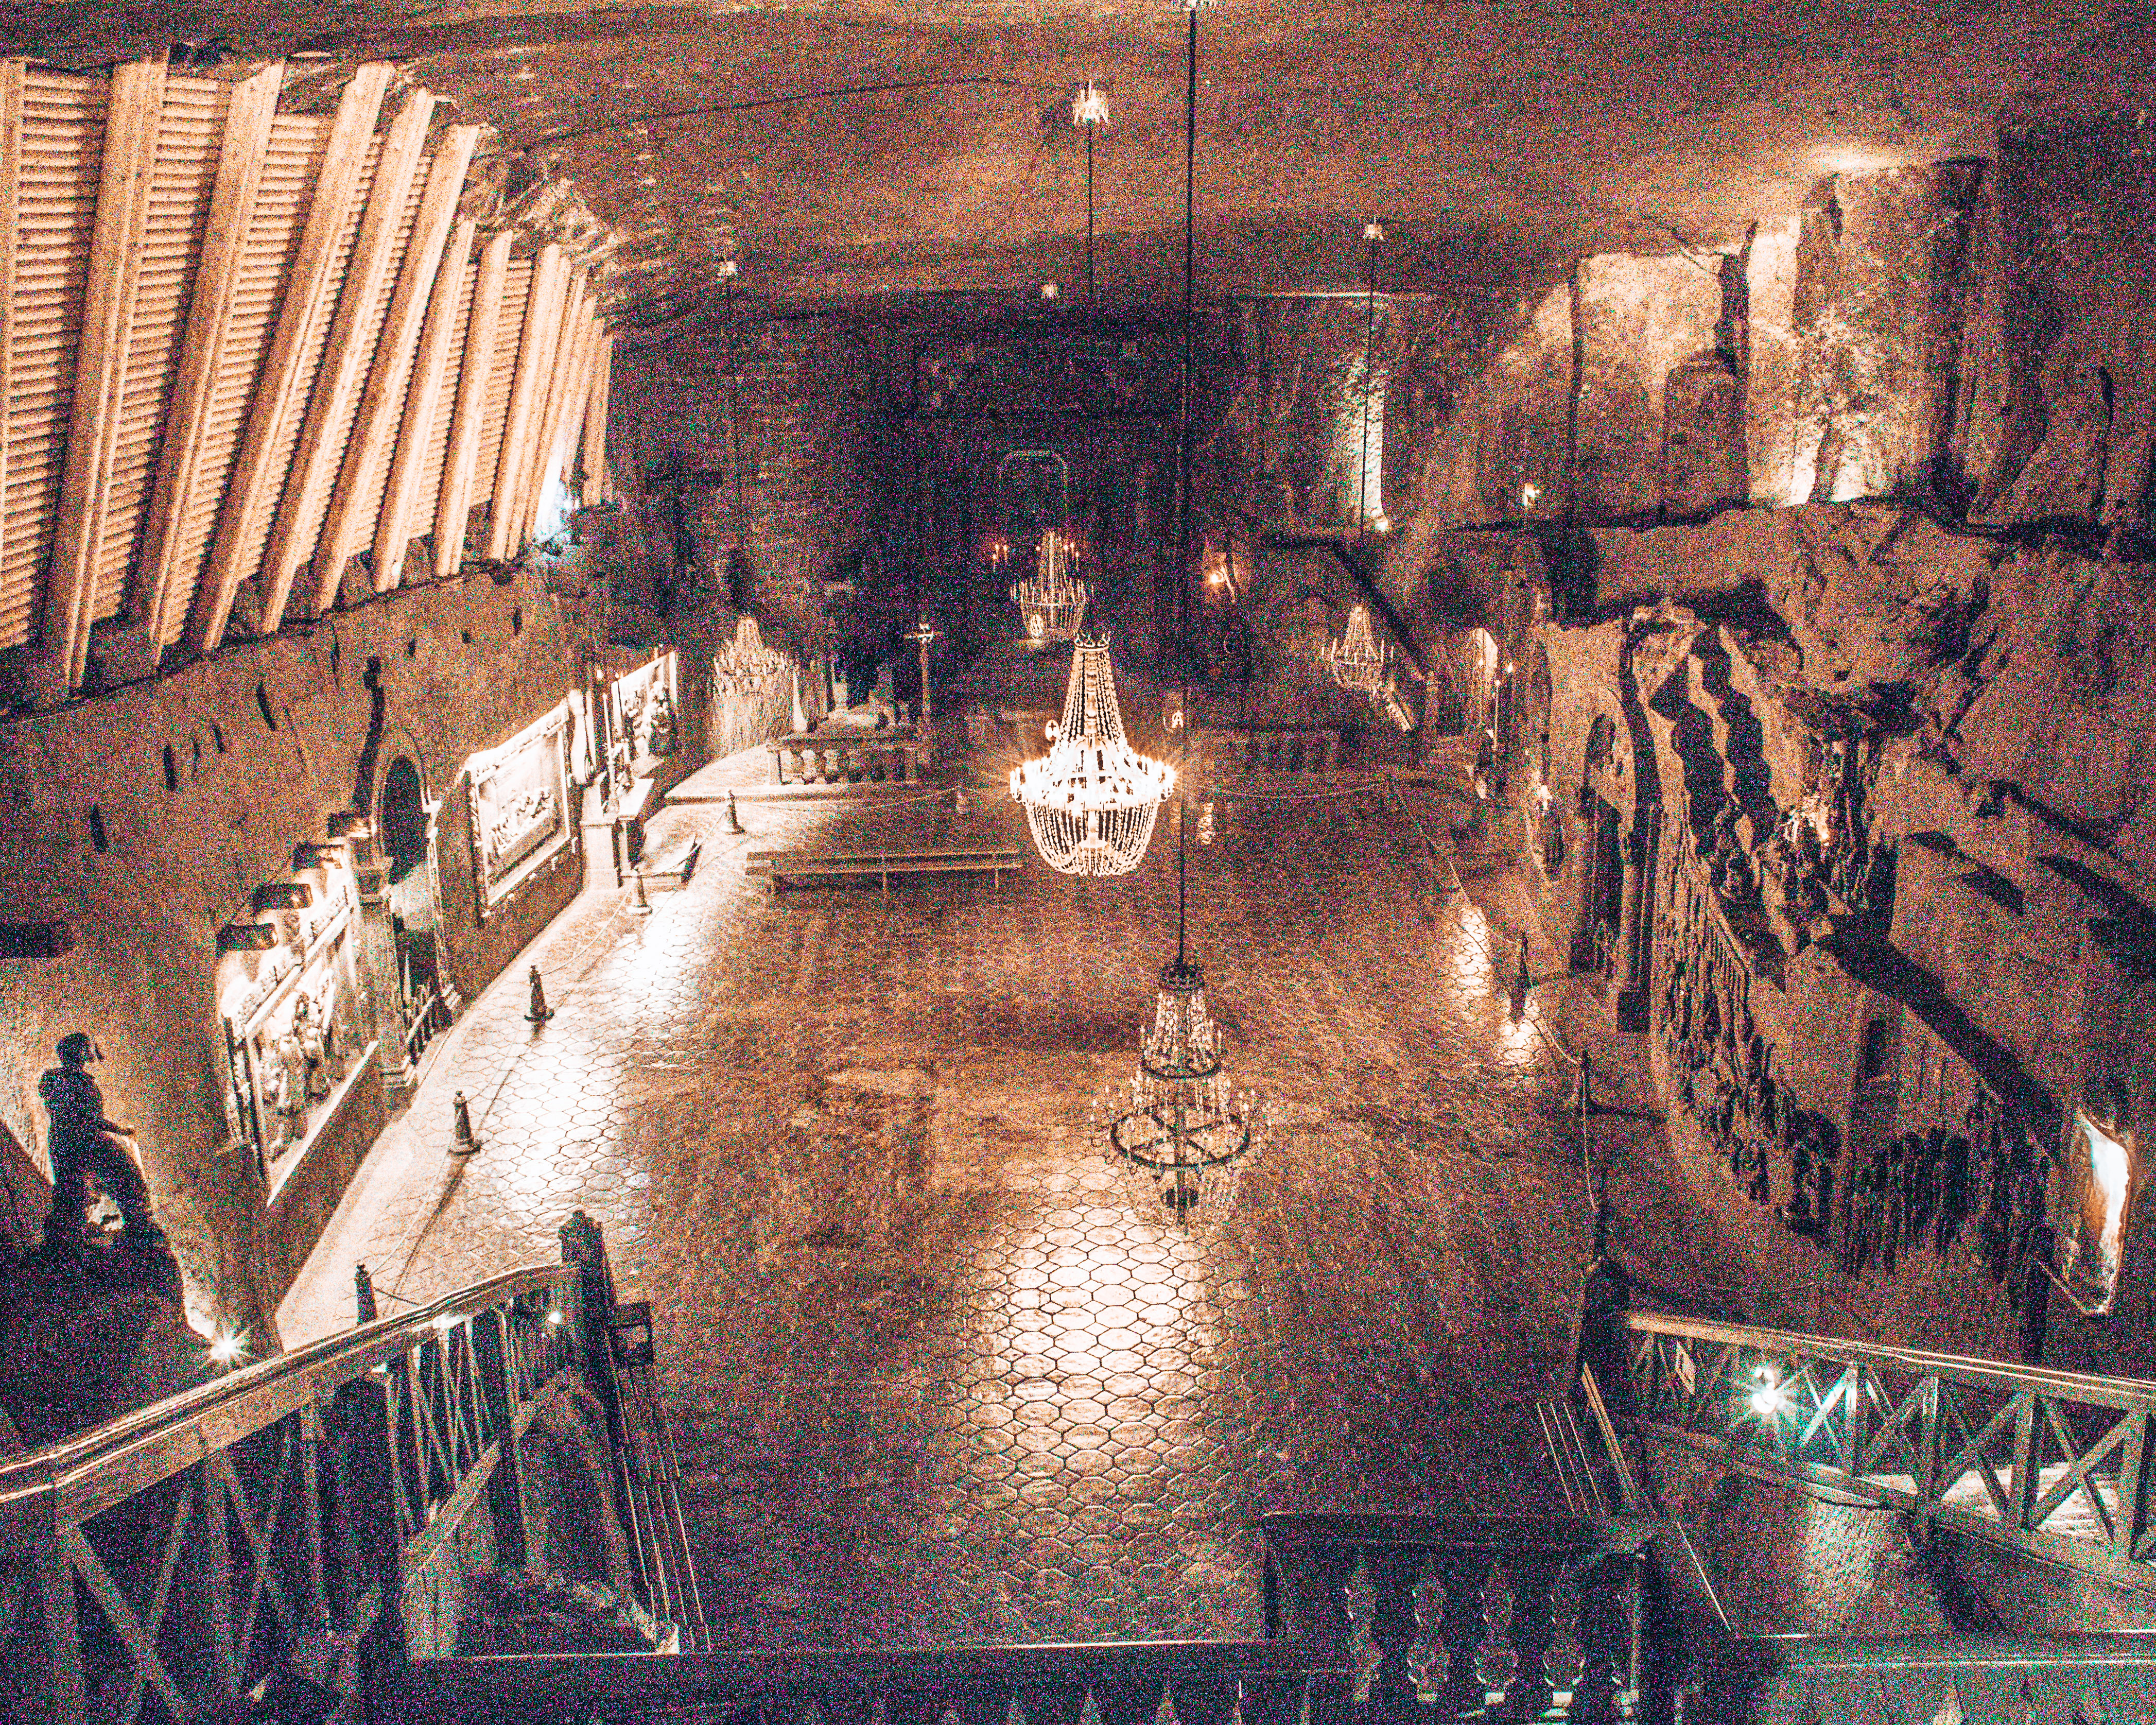 The largest underground chapel at the Wielicska salt mines in Wielicksa, Poland